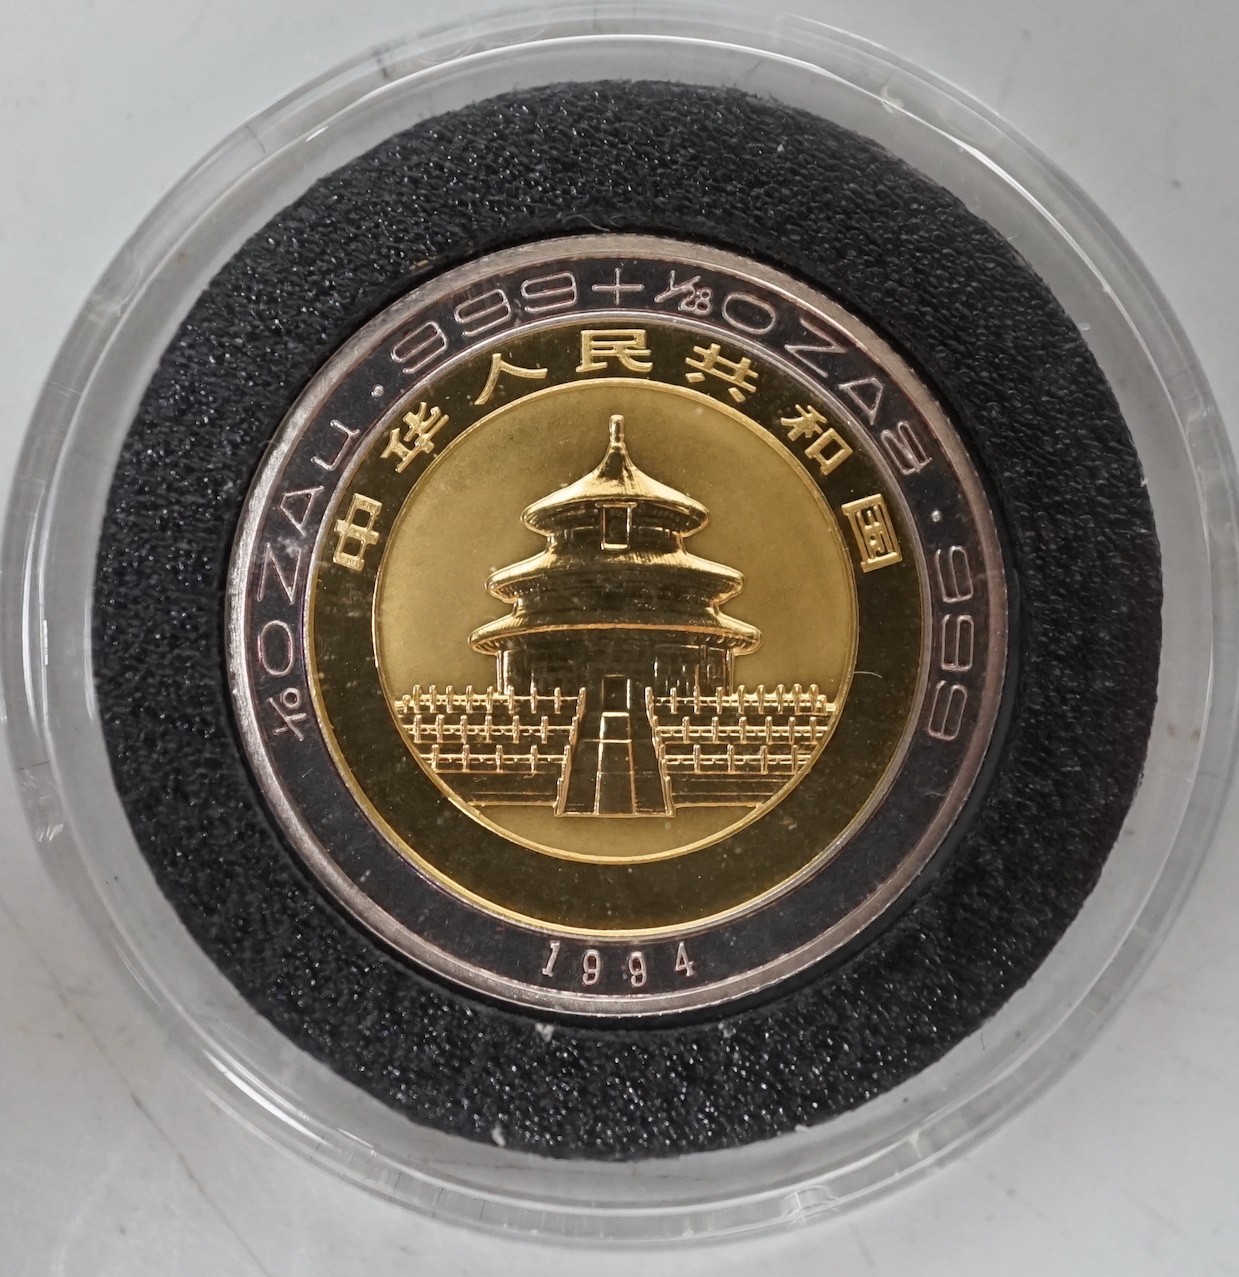 A Chinese Panda gold and silver 10 Yuan coin                                                                                                                                                                                